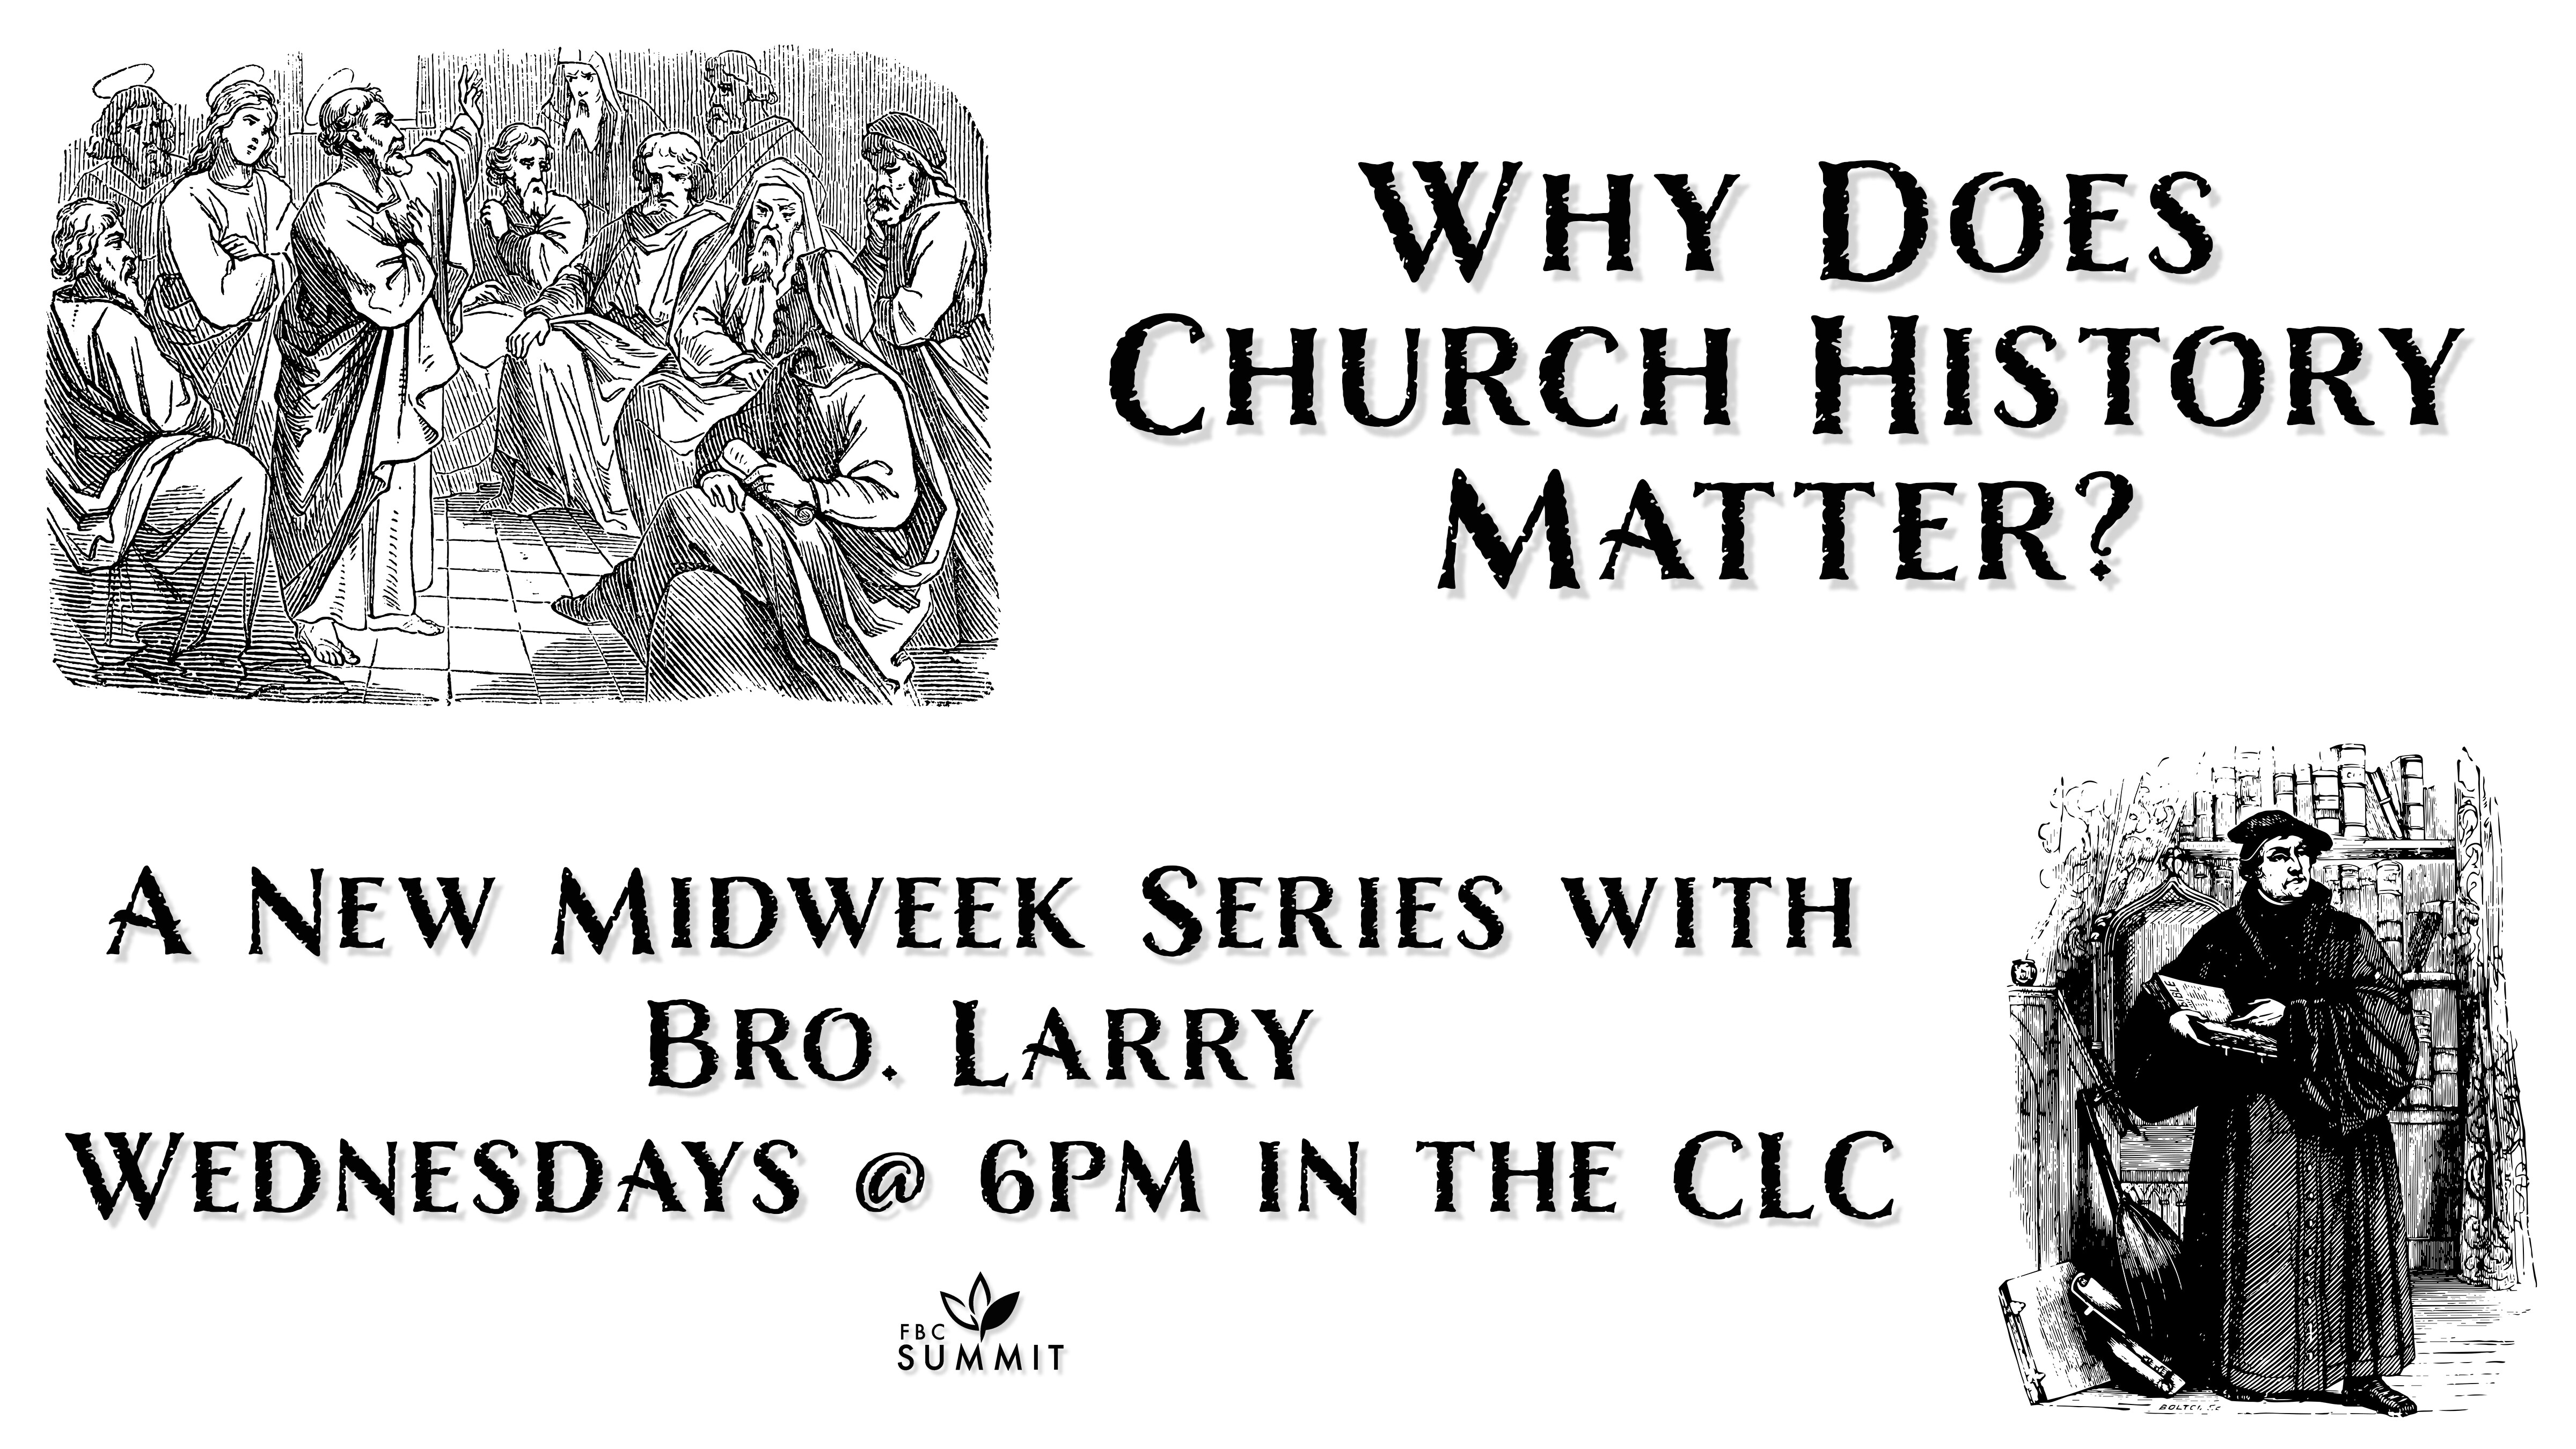 Midweek Bible Study: "Church History 101: The 15th & 16th Centuries" // Dr. Larry LeBlanc